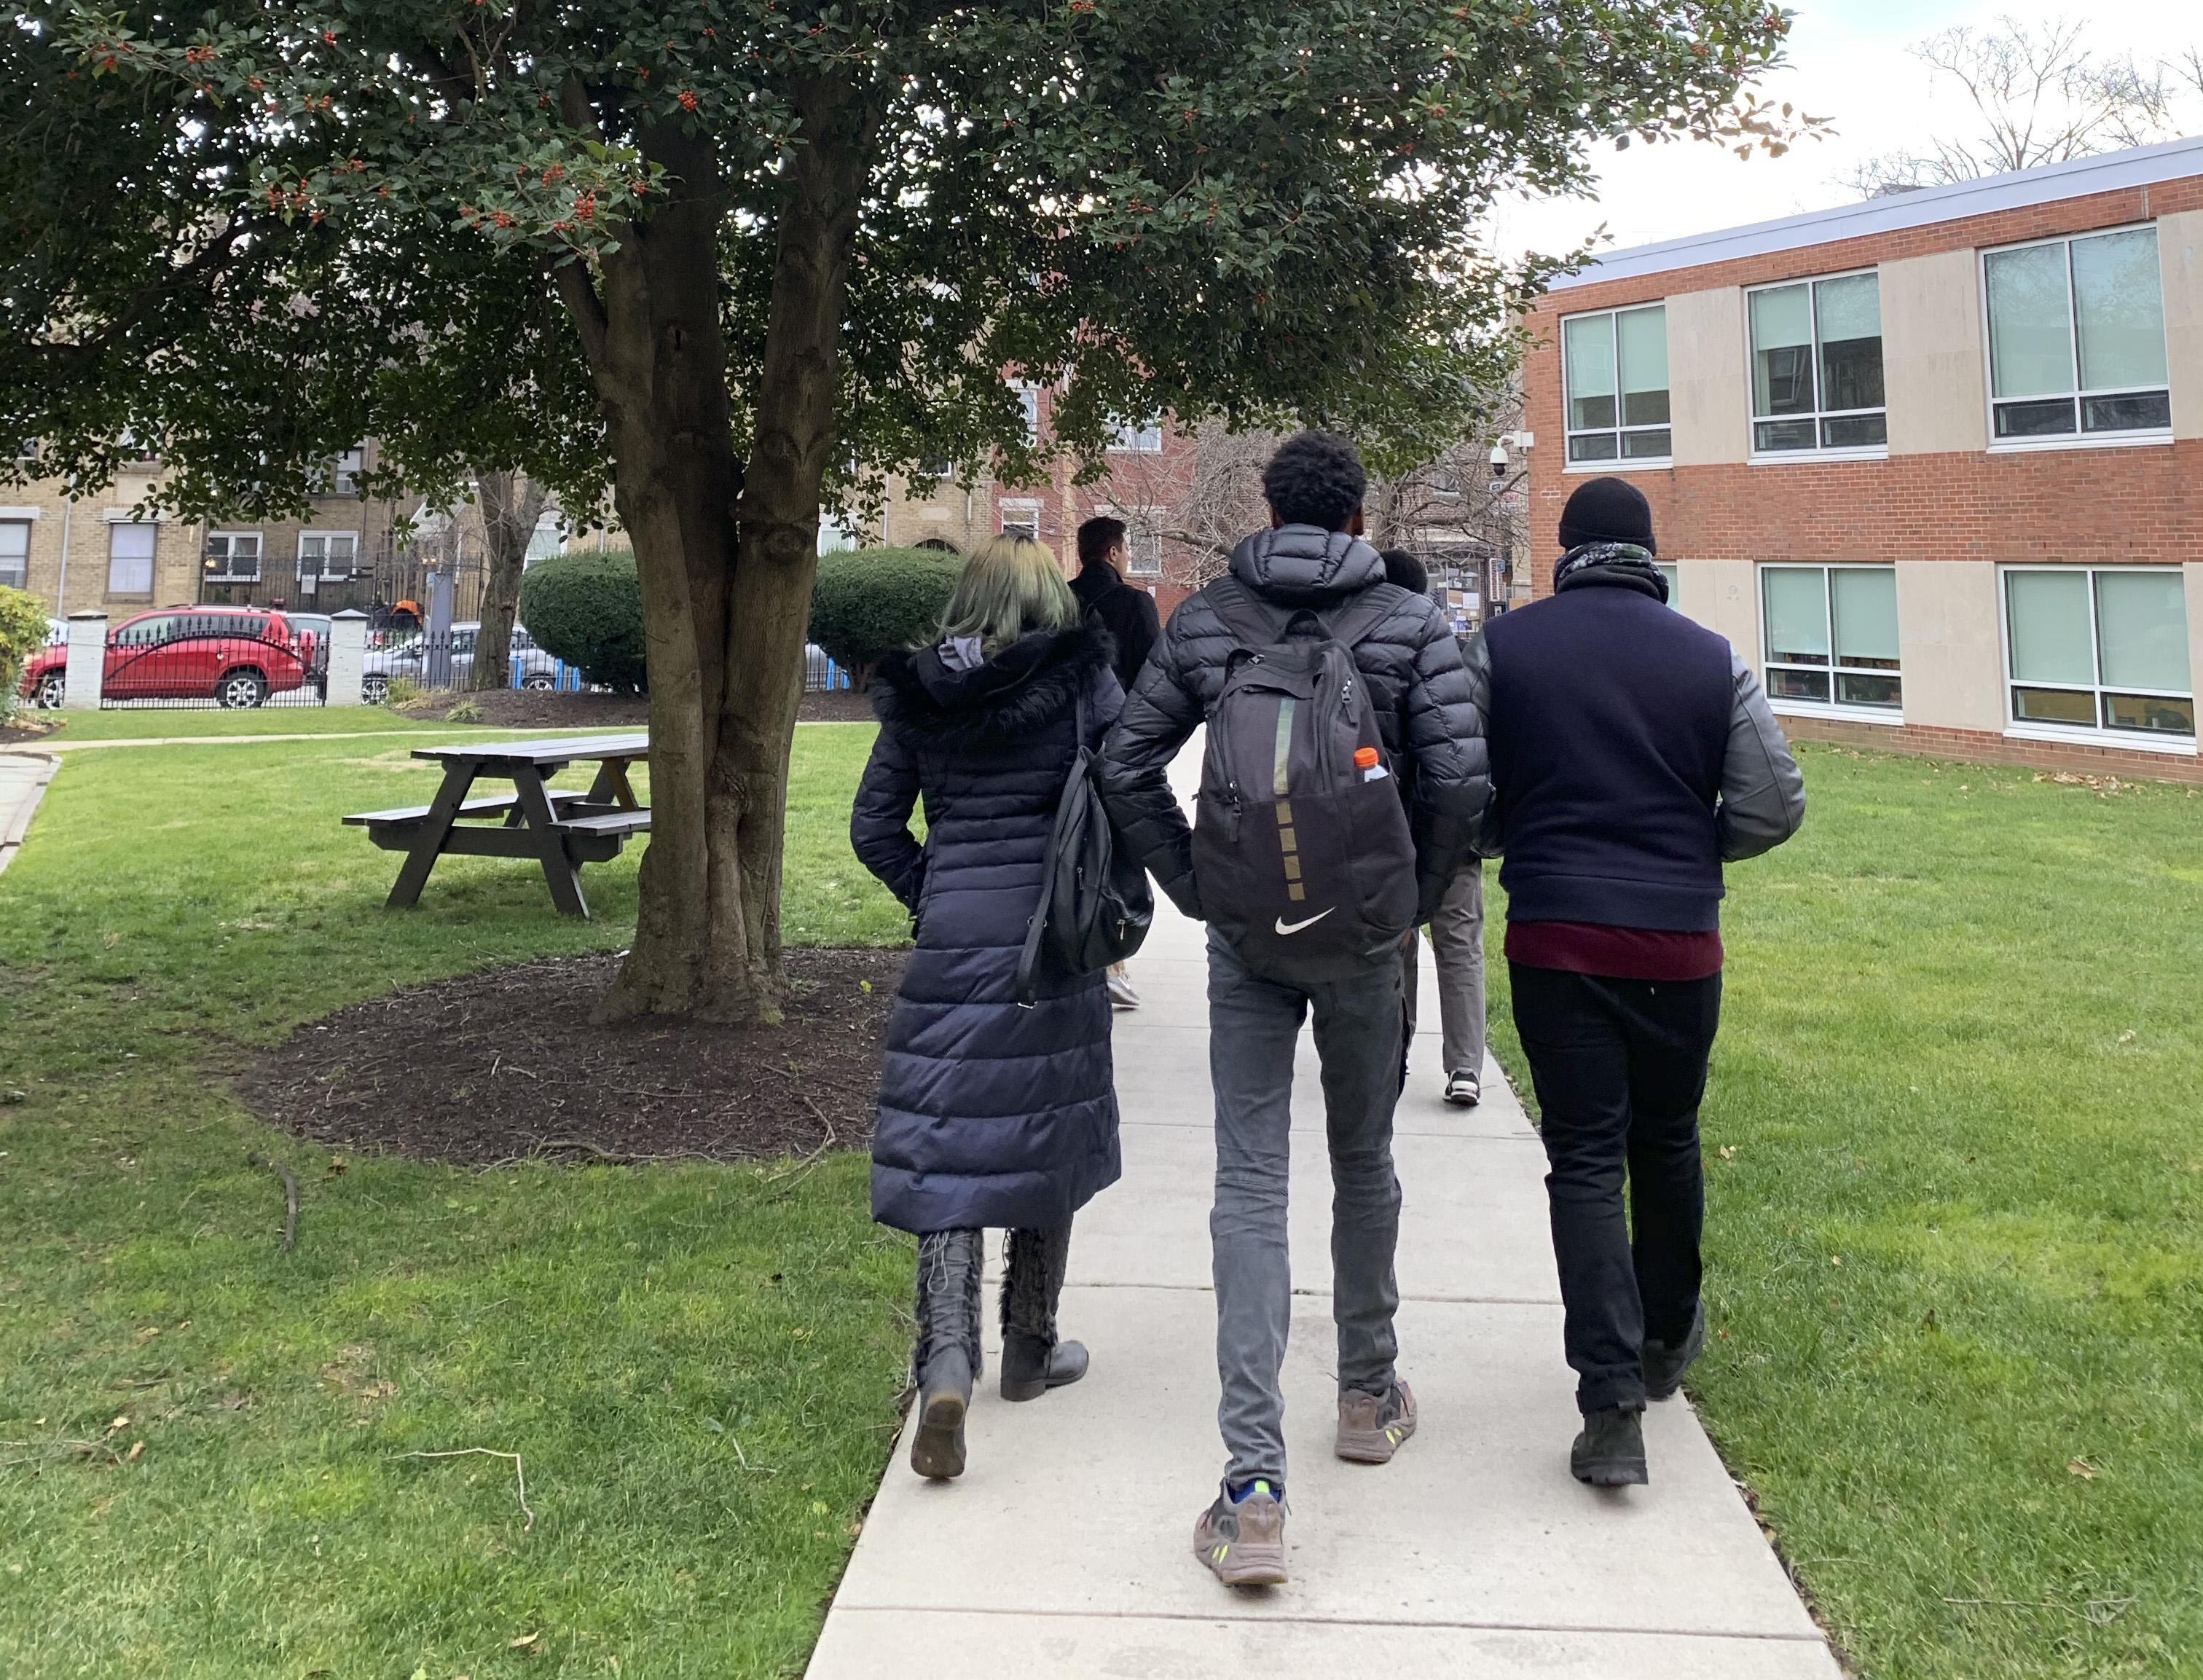 Students Walking